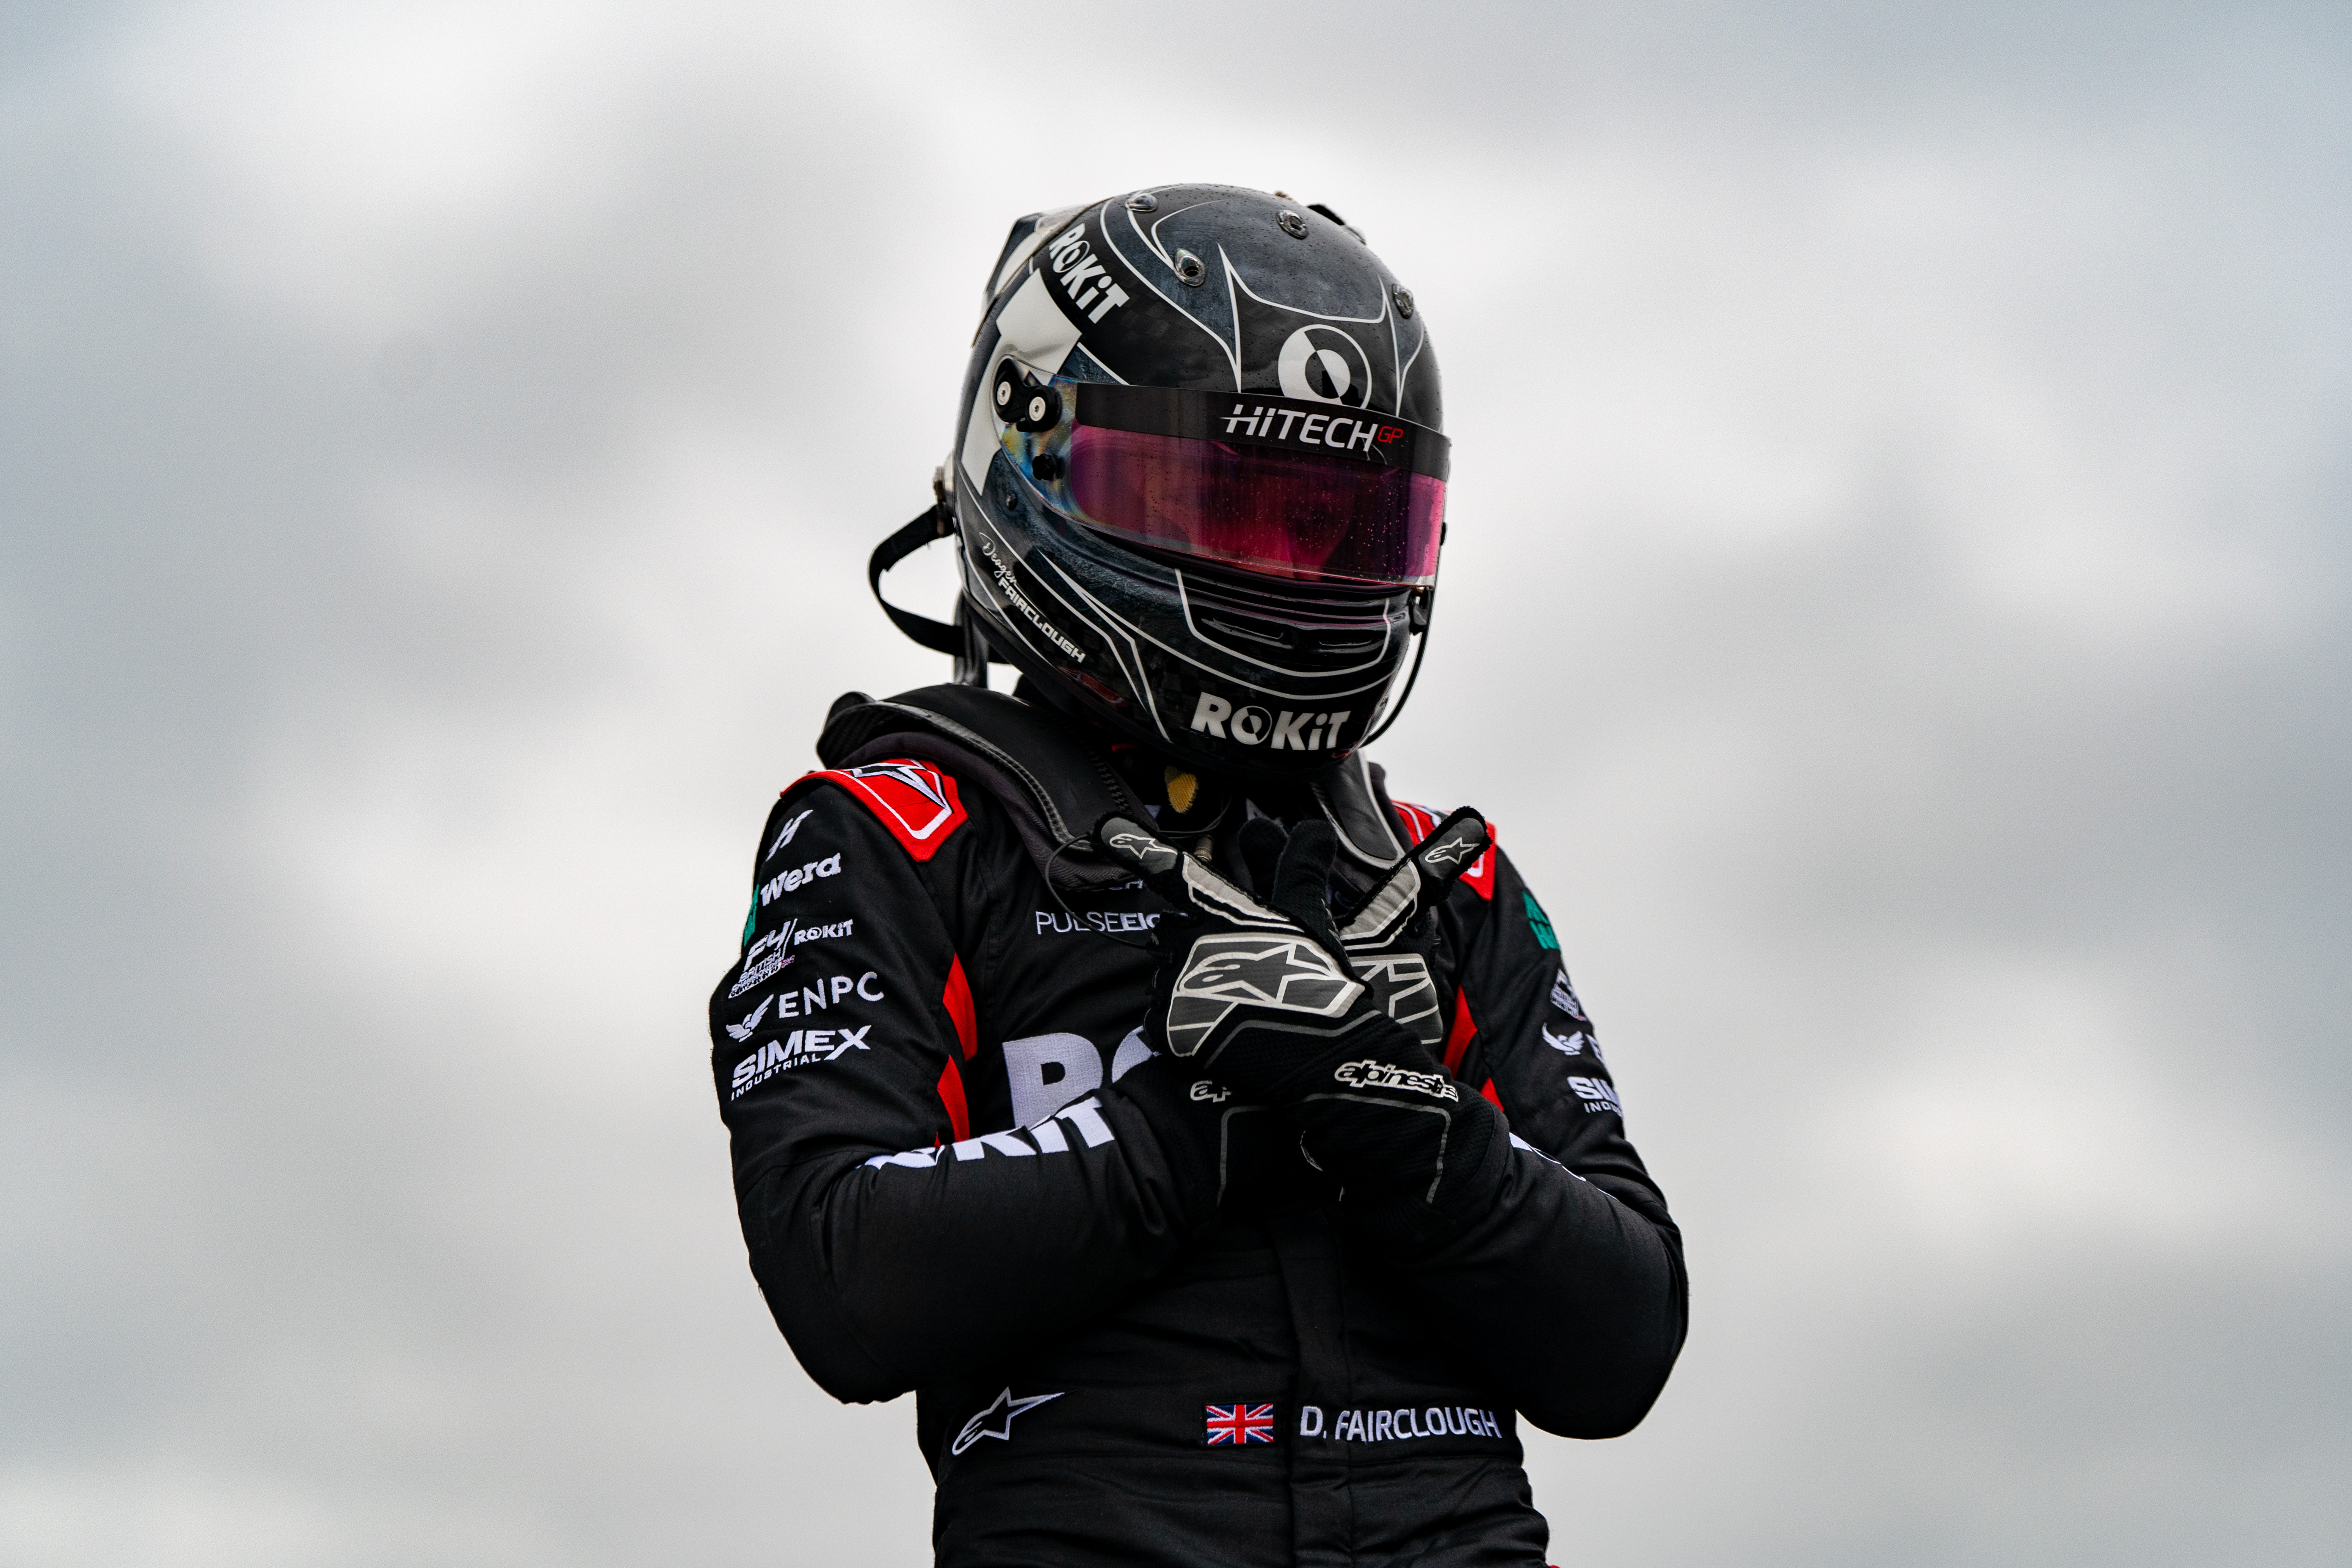 Deagen Fairclough Dominates Race 1 at Donington Park in ROKiT British F4 Opener